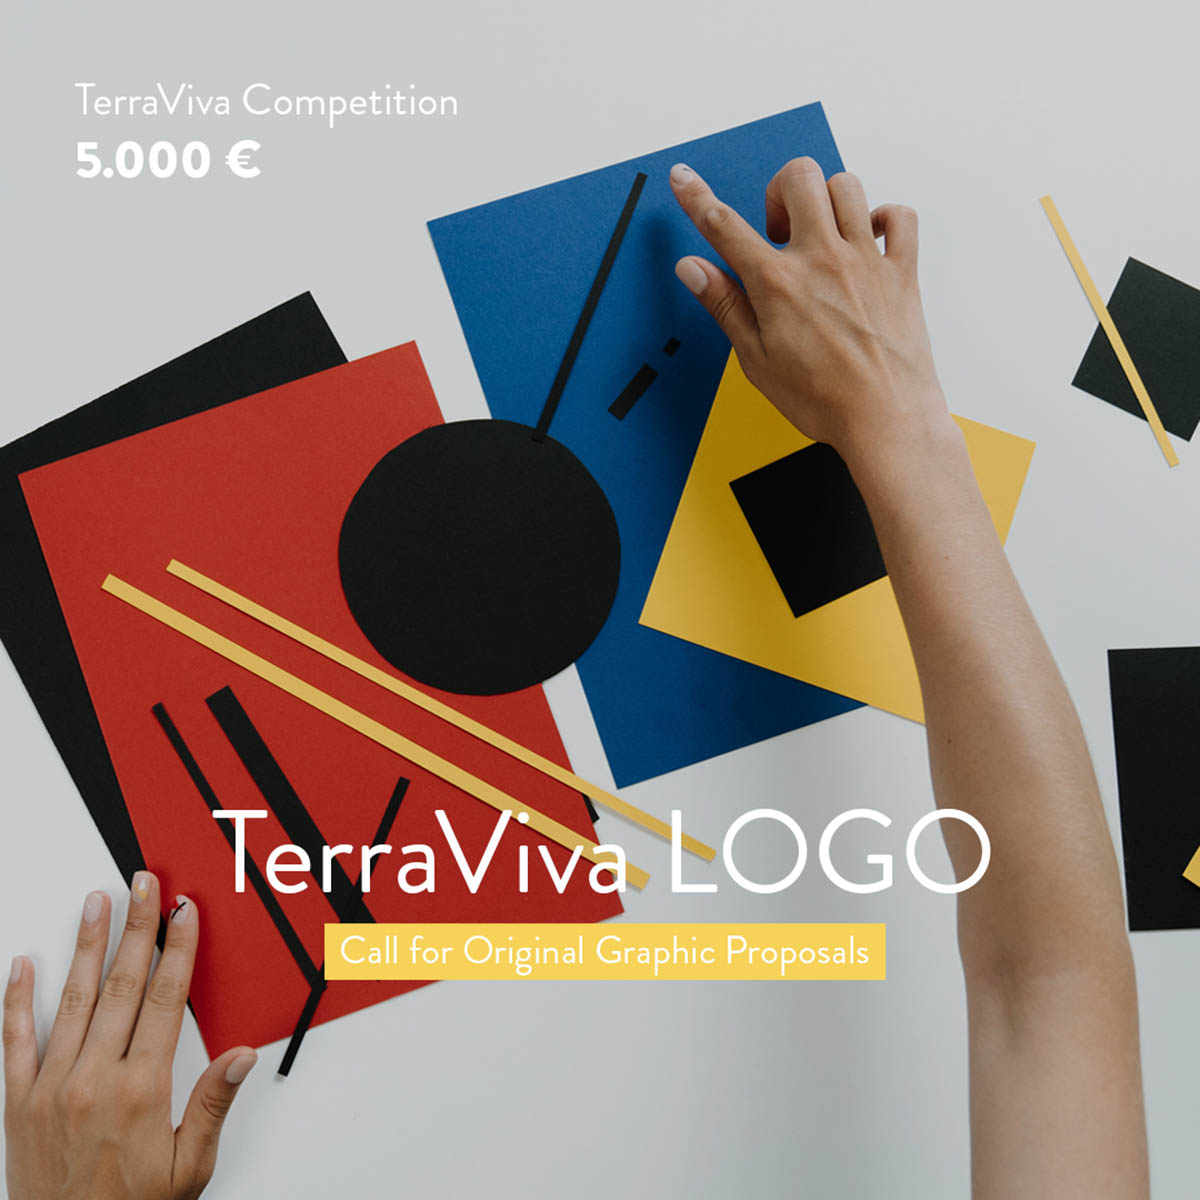 TerraViva LOGO- Graphic Design Competition